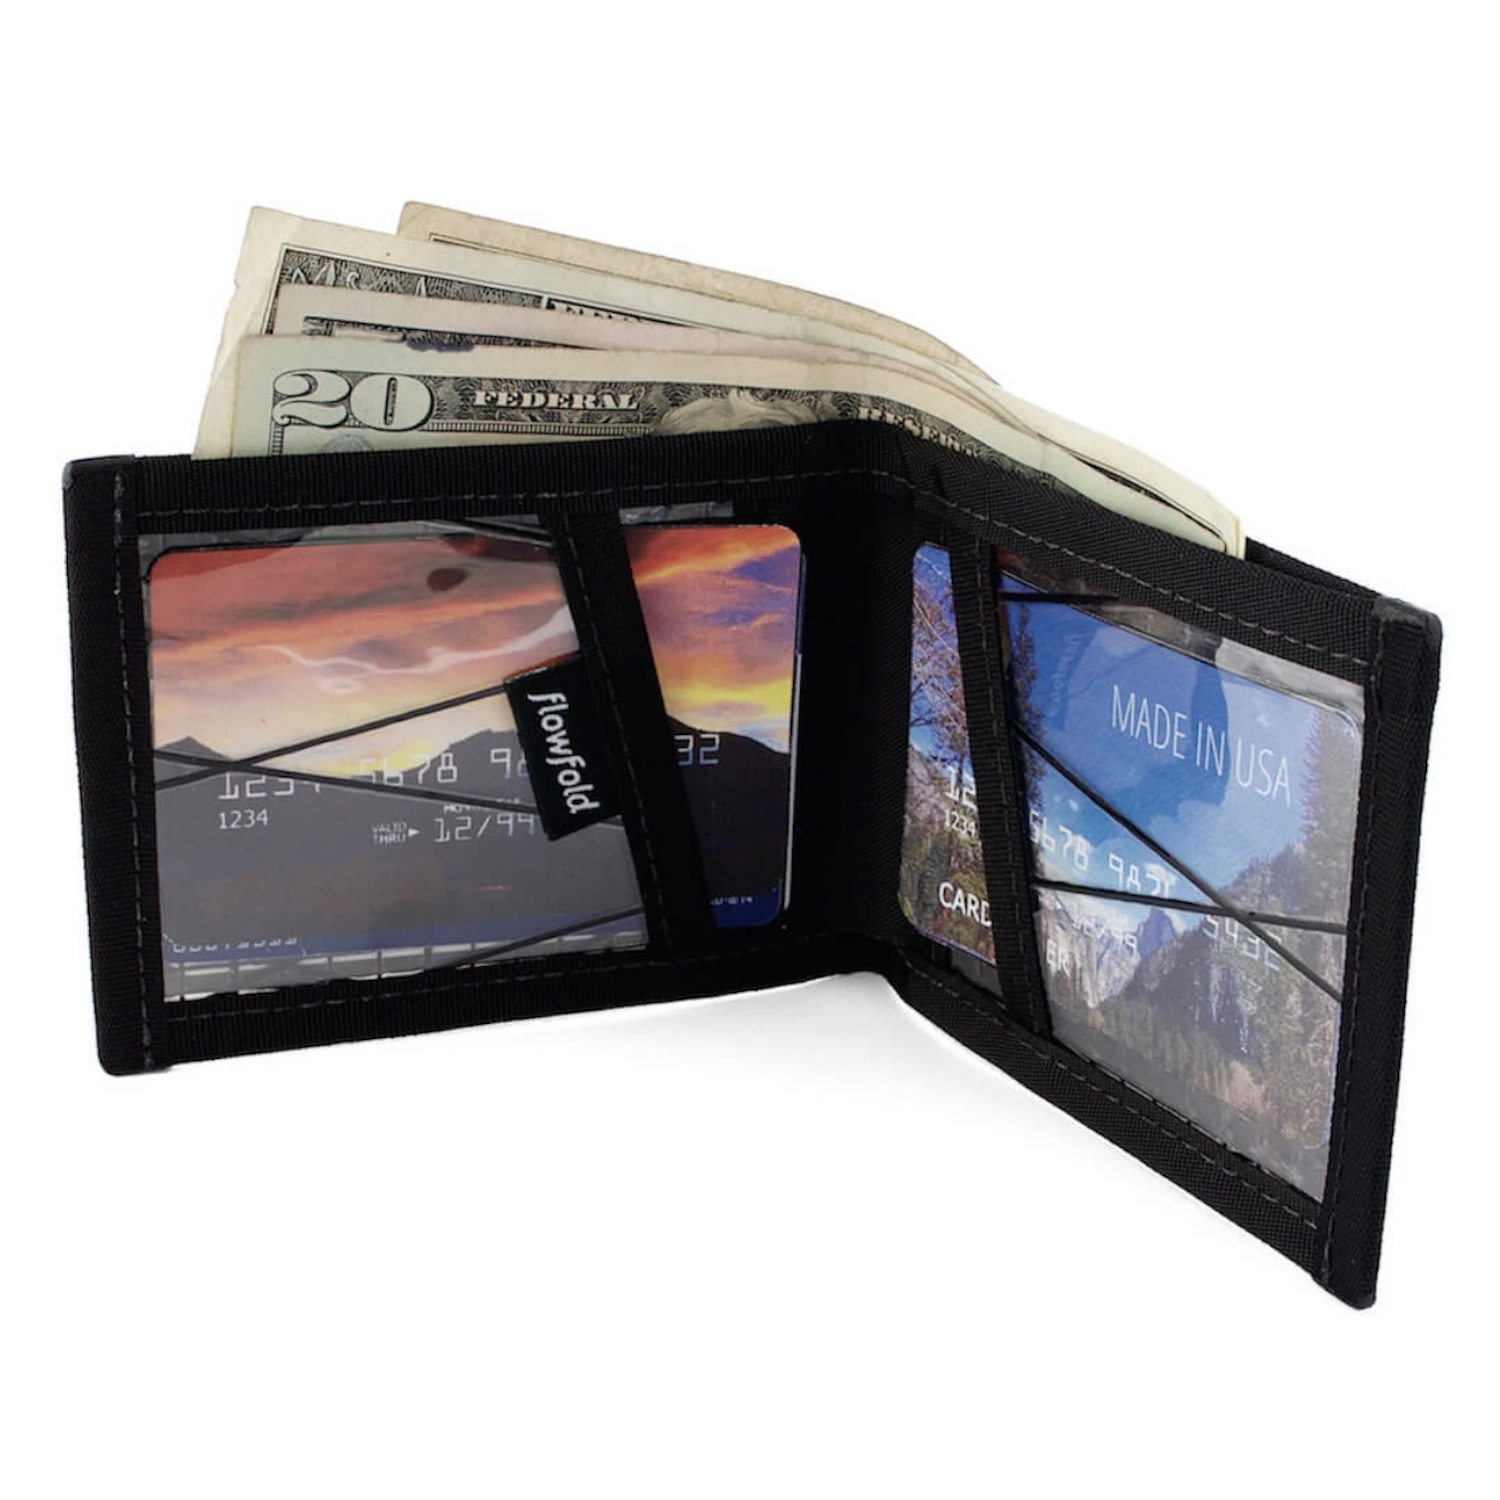 Flowfold | Recycled Sailcloth Vanguard Bifold Wallet Card Holder, Wallet, Flowfold, Defiance Outdoor Gear Co.